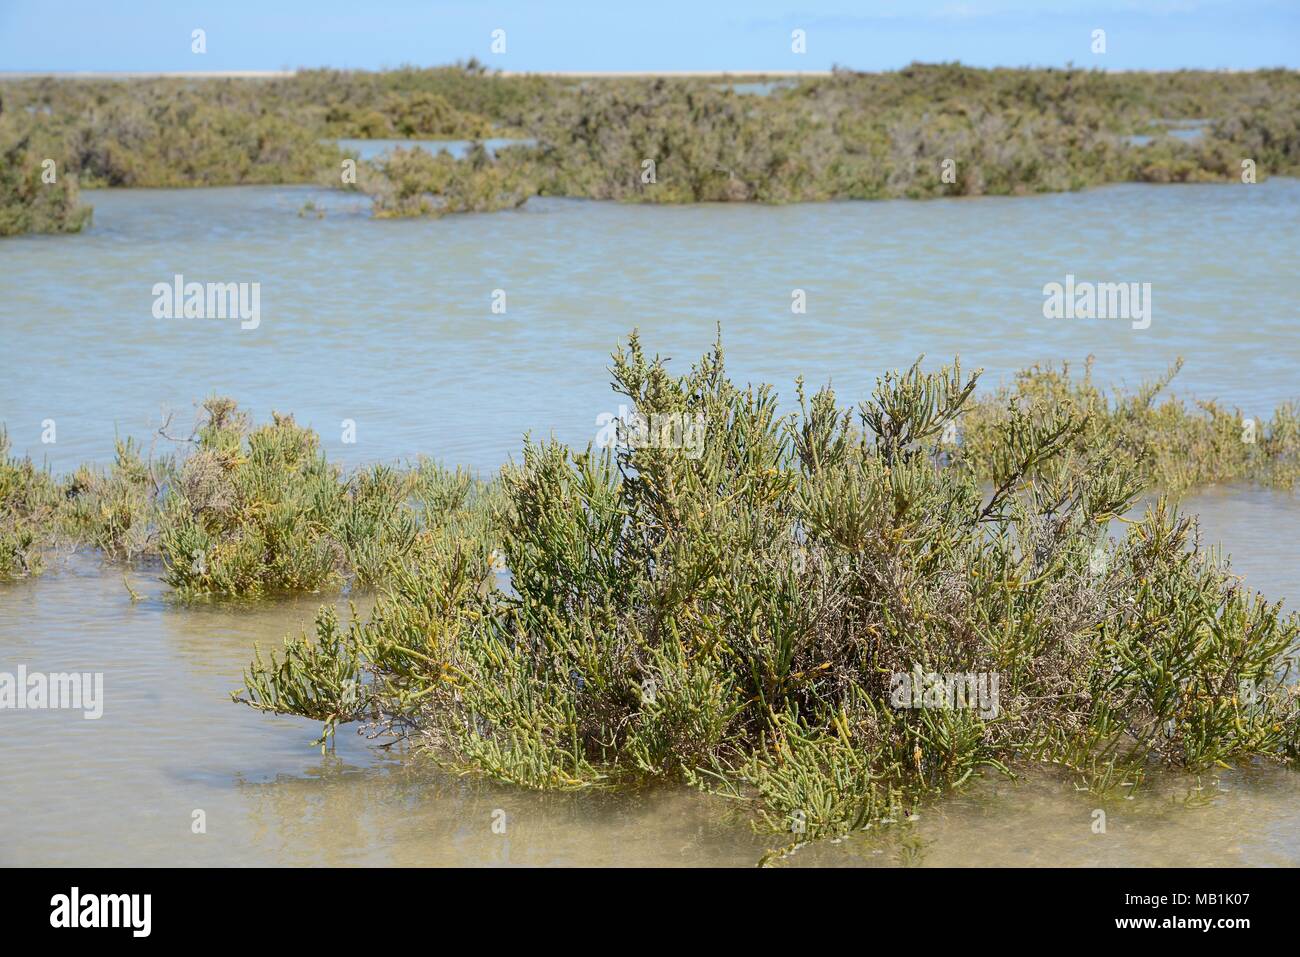 Glaucous glasswort (Arthrocnemum macrostachyum / glaucum) bushes partly submerged by a high tide in a coastal lagoon, Sotavento, Fuerteventura. Stock Photo